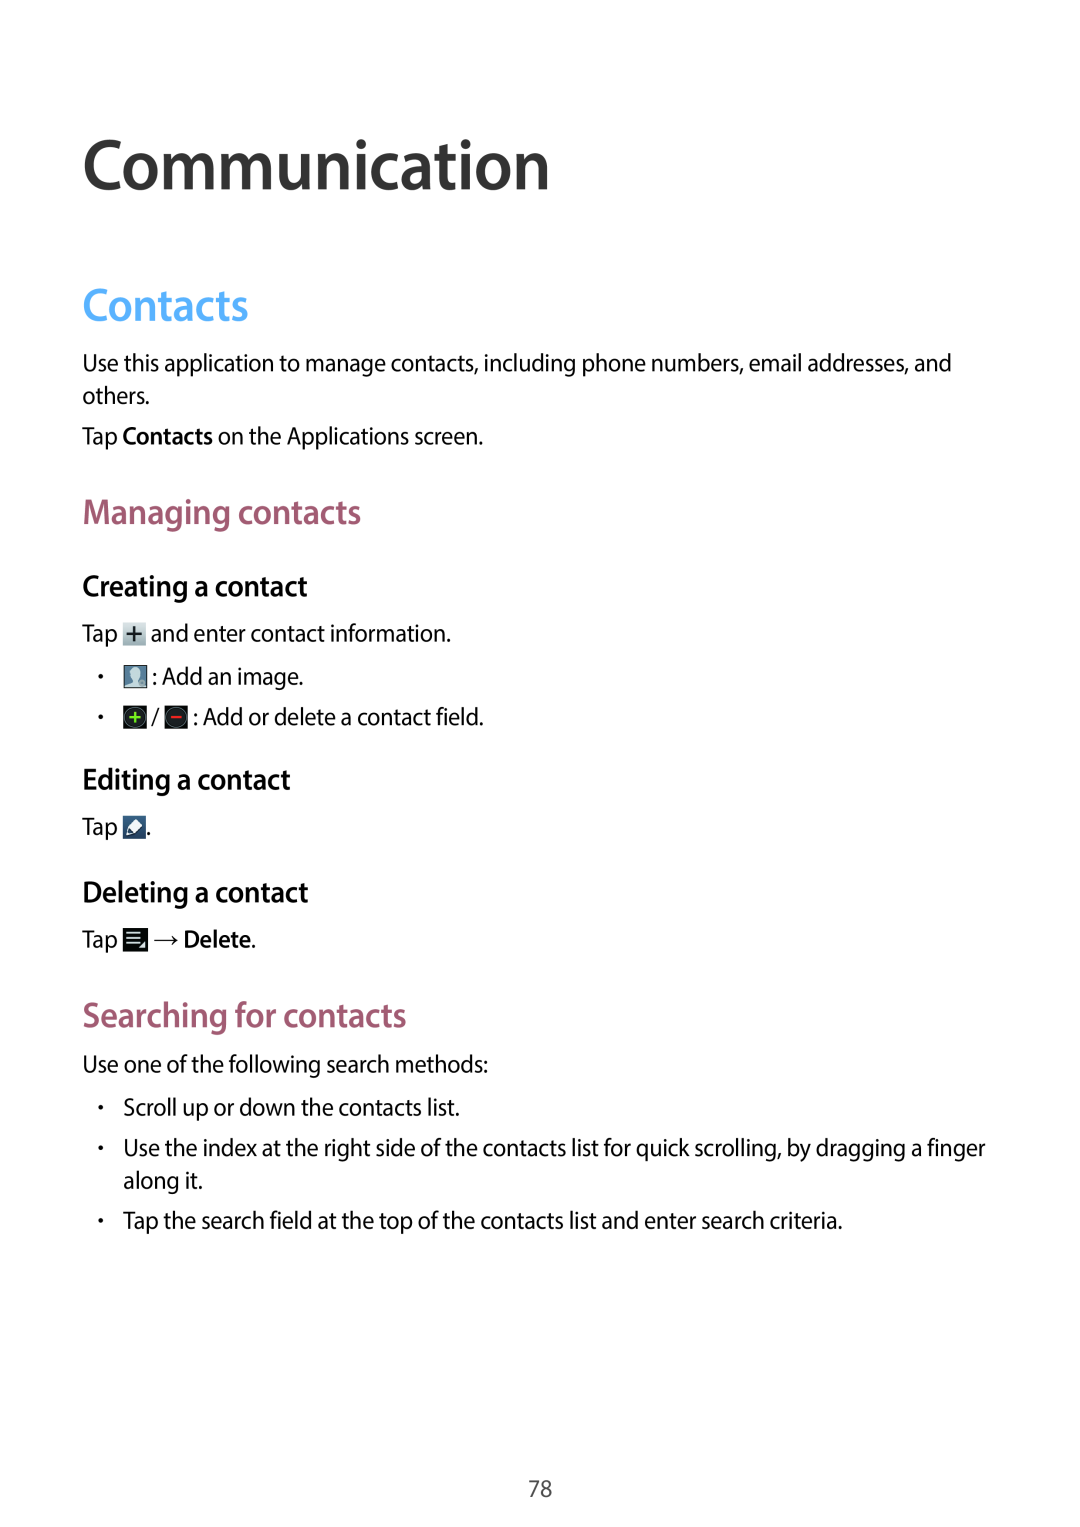 Samsung EK-GC100 Communication, Contacts, Managing contacts, Searching for contacts, Creating a contact, Editing a contact 